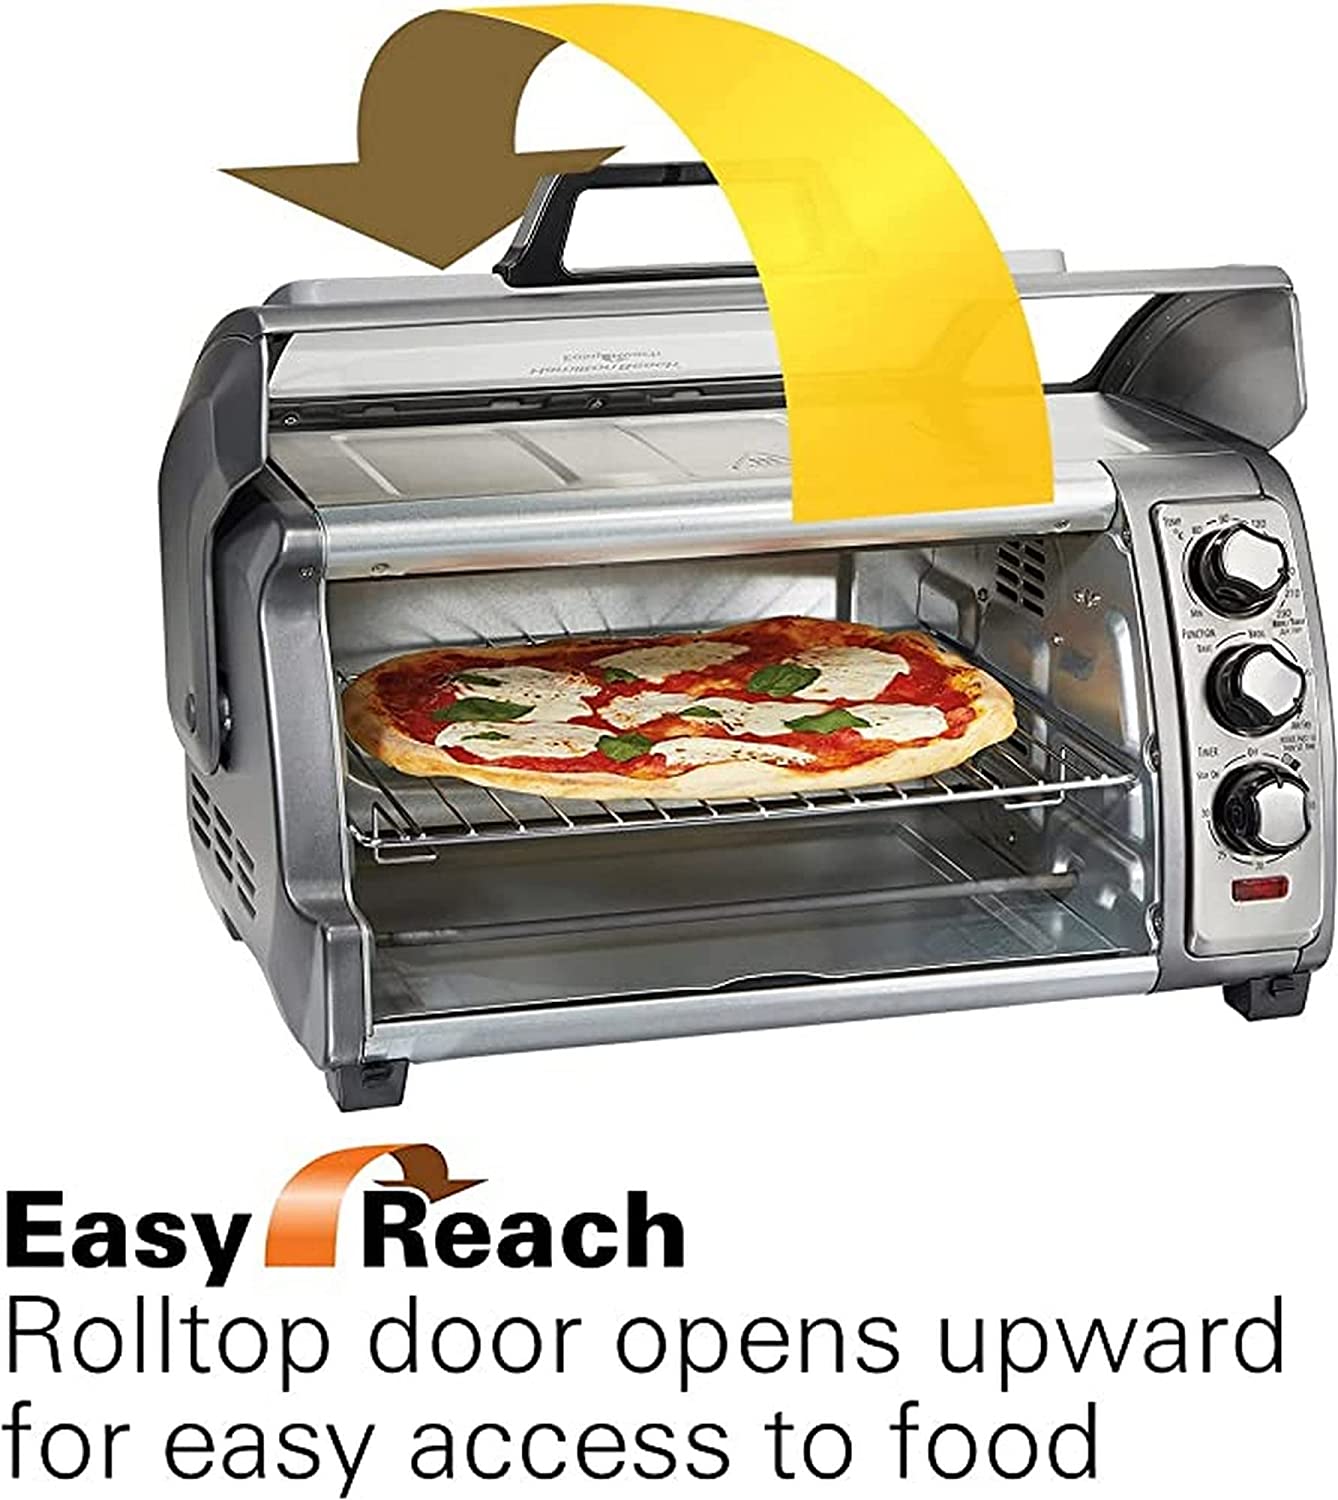 Hamilton Beach Countertop Toaster Oven, Easy Reach with Roll-Top